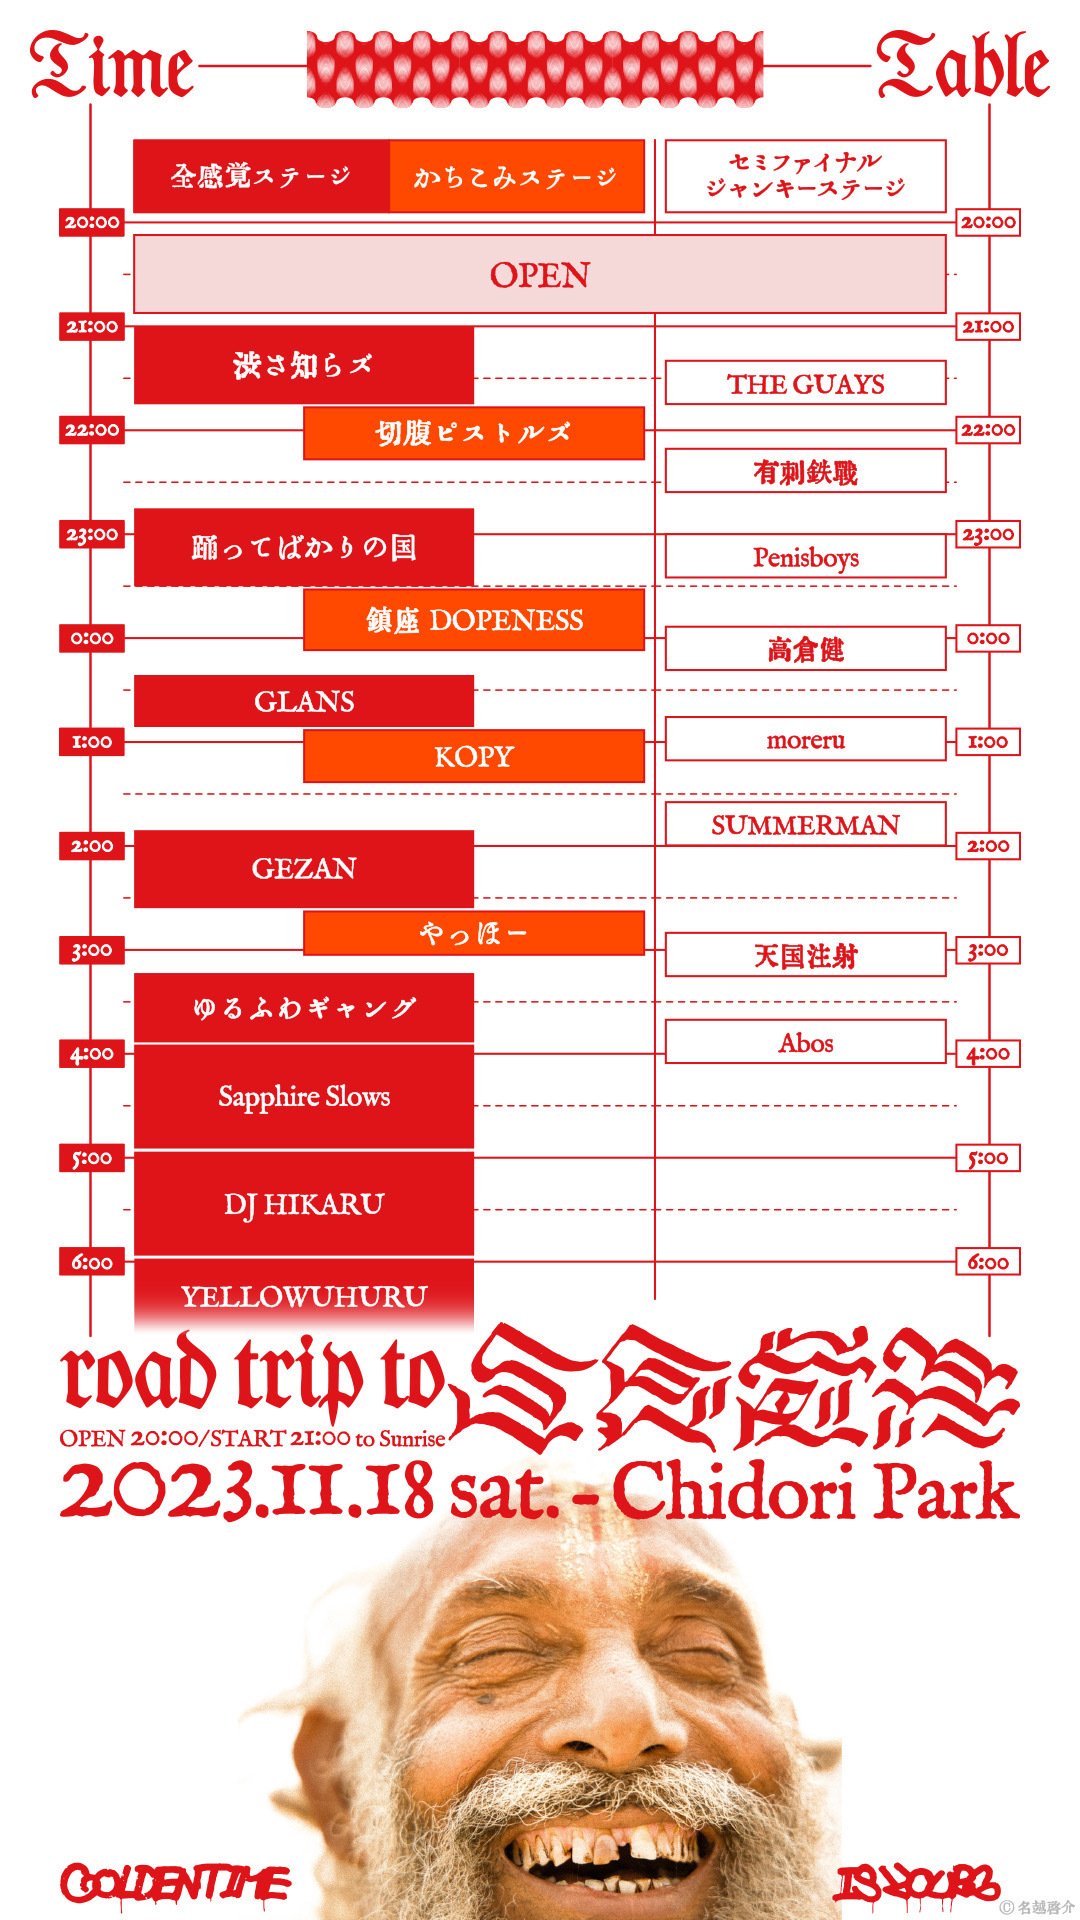 『Road Trip To 全感覚祭』タイムテーブル